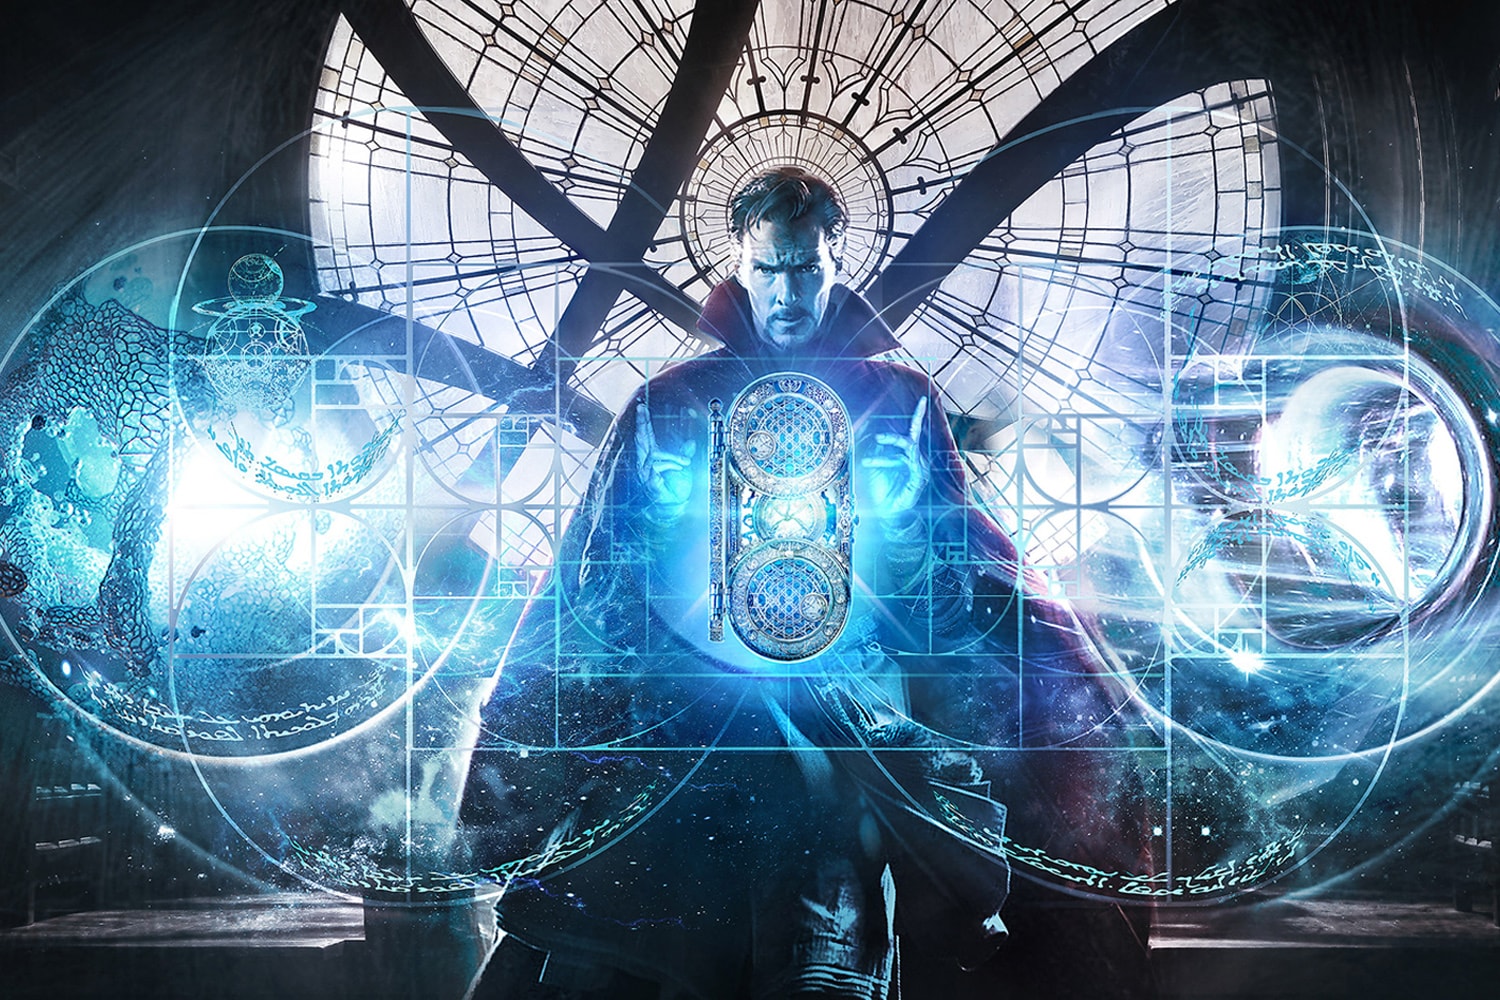 Marvel《奇異博士 2：失控多重宇宙》原版反派「夢魘」藝術概念圖正式公開